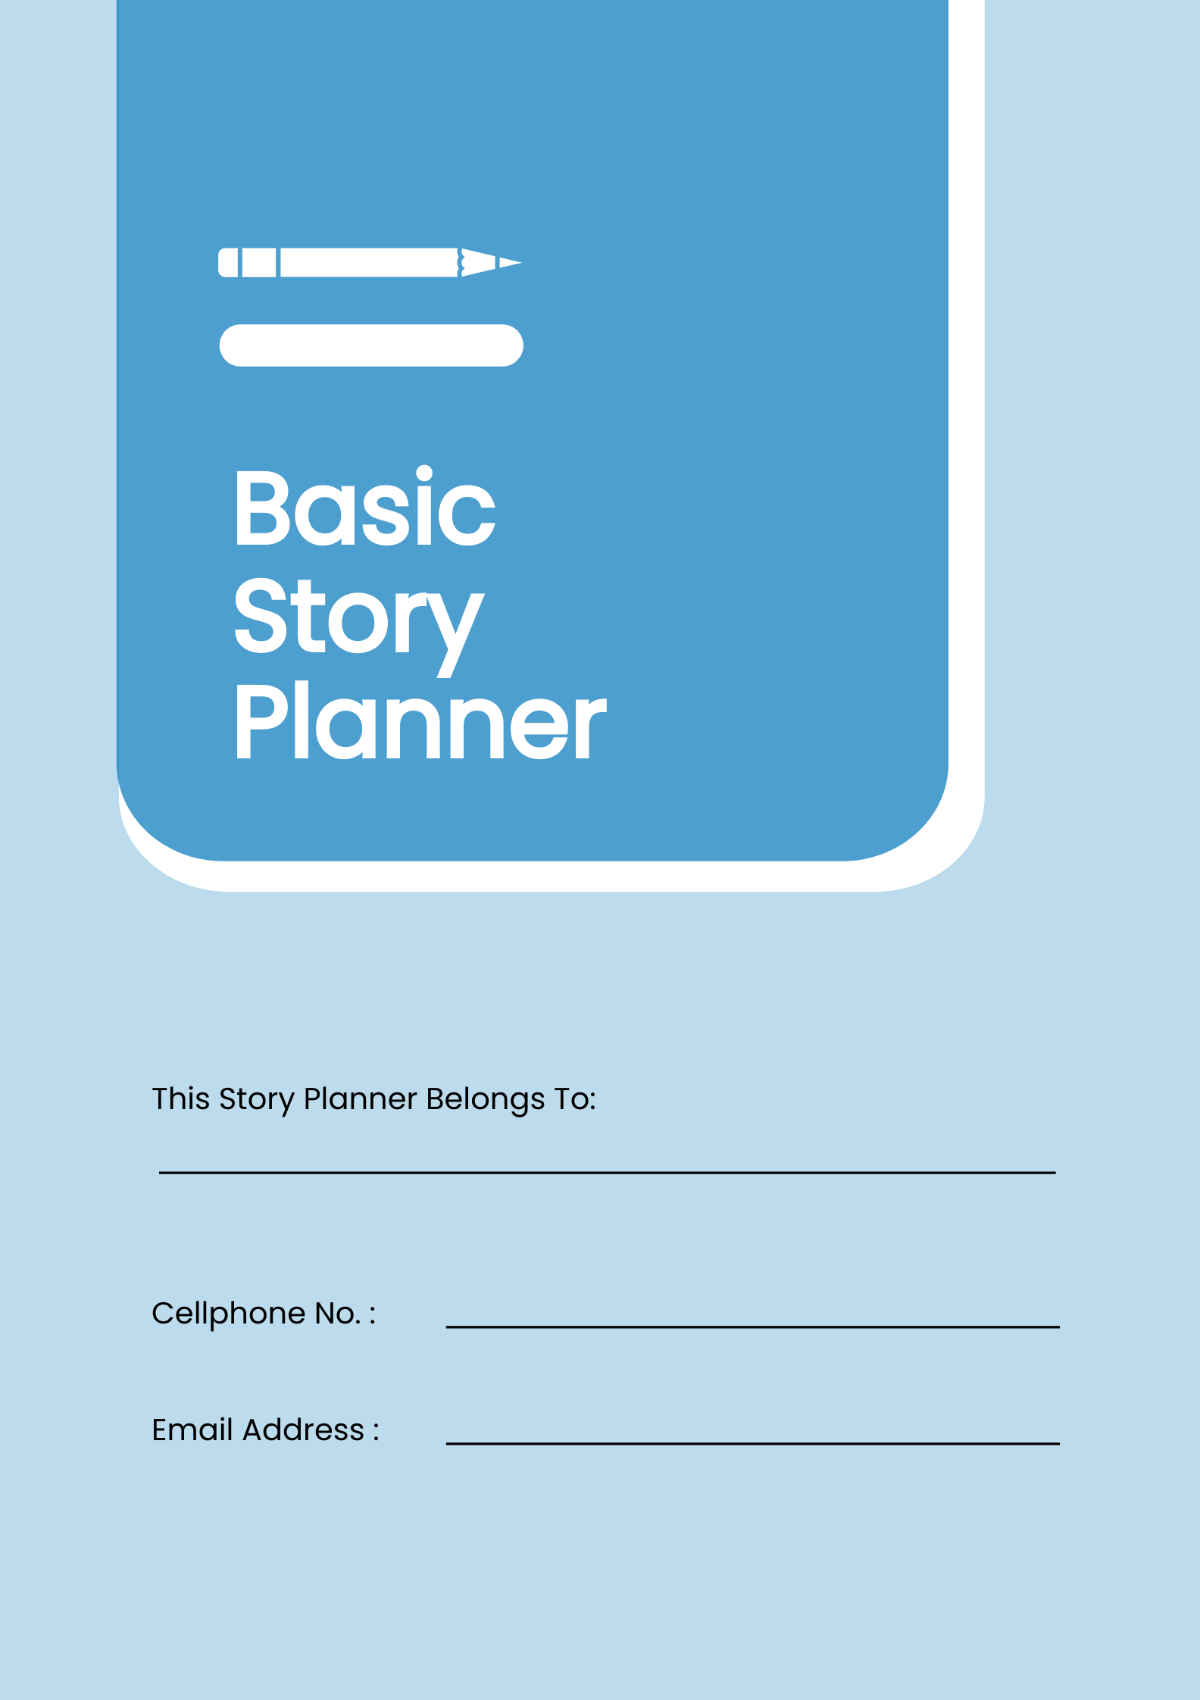 Basic Story Planner Template